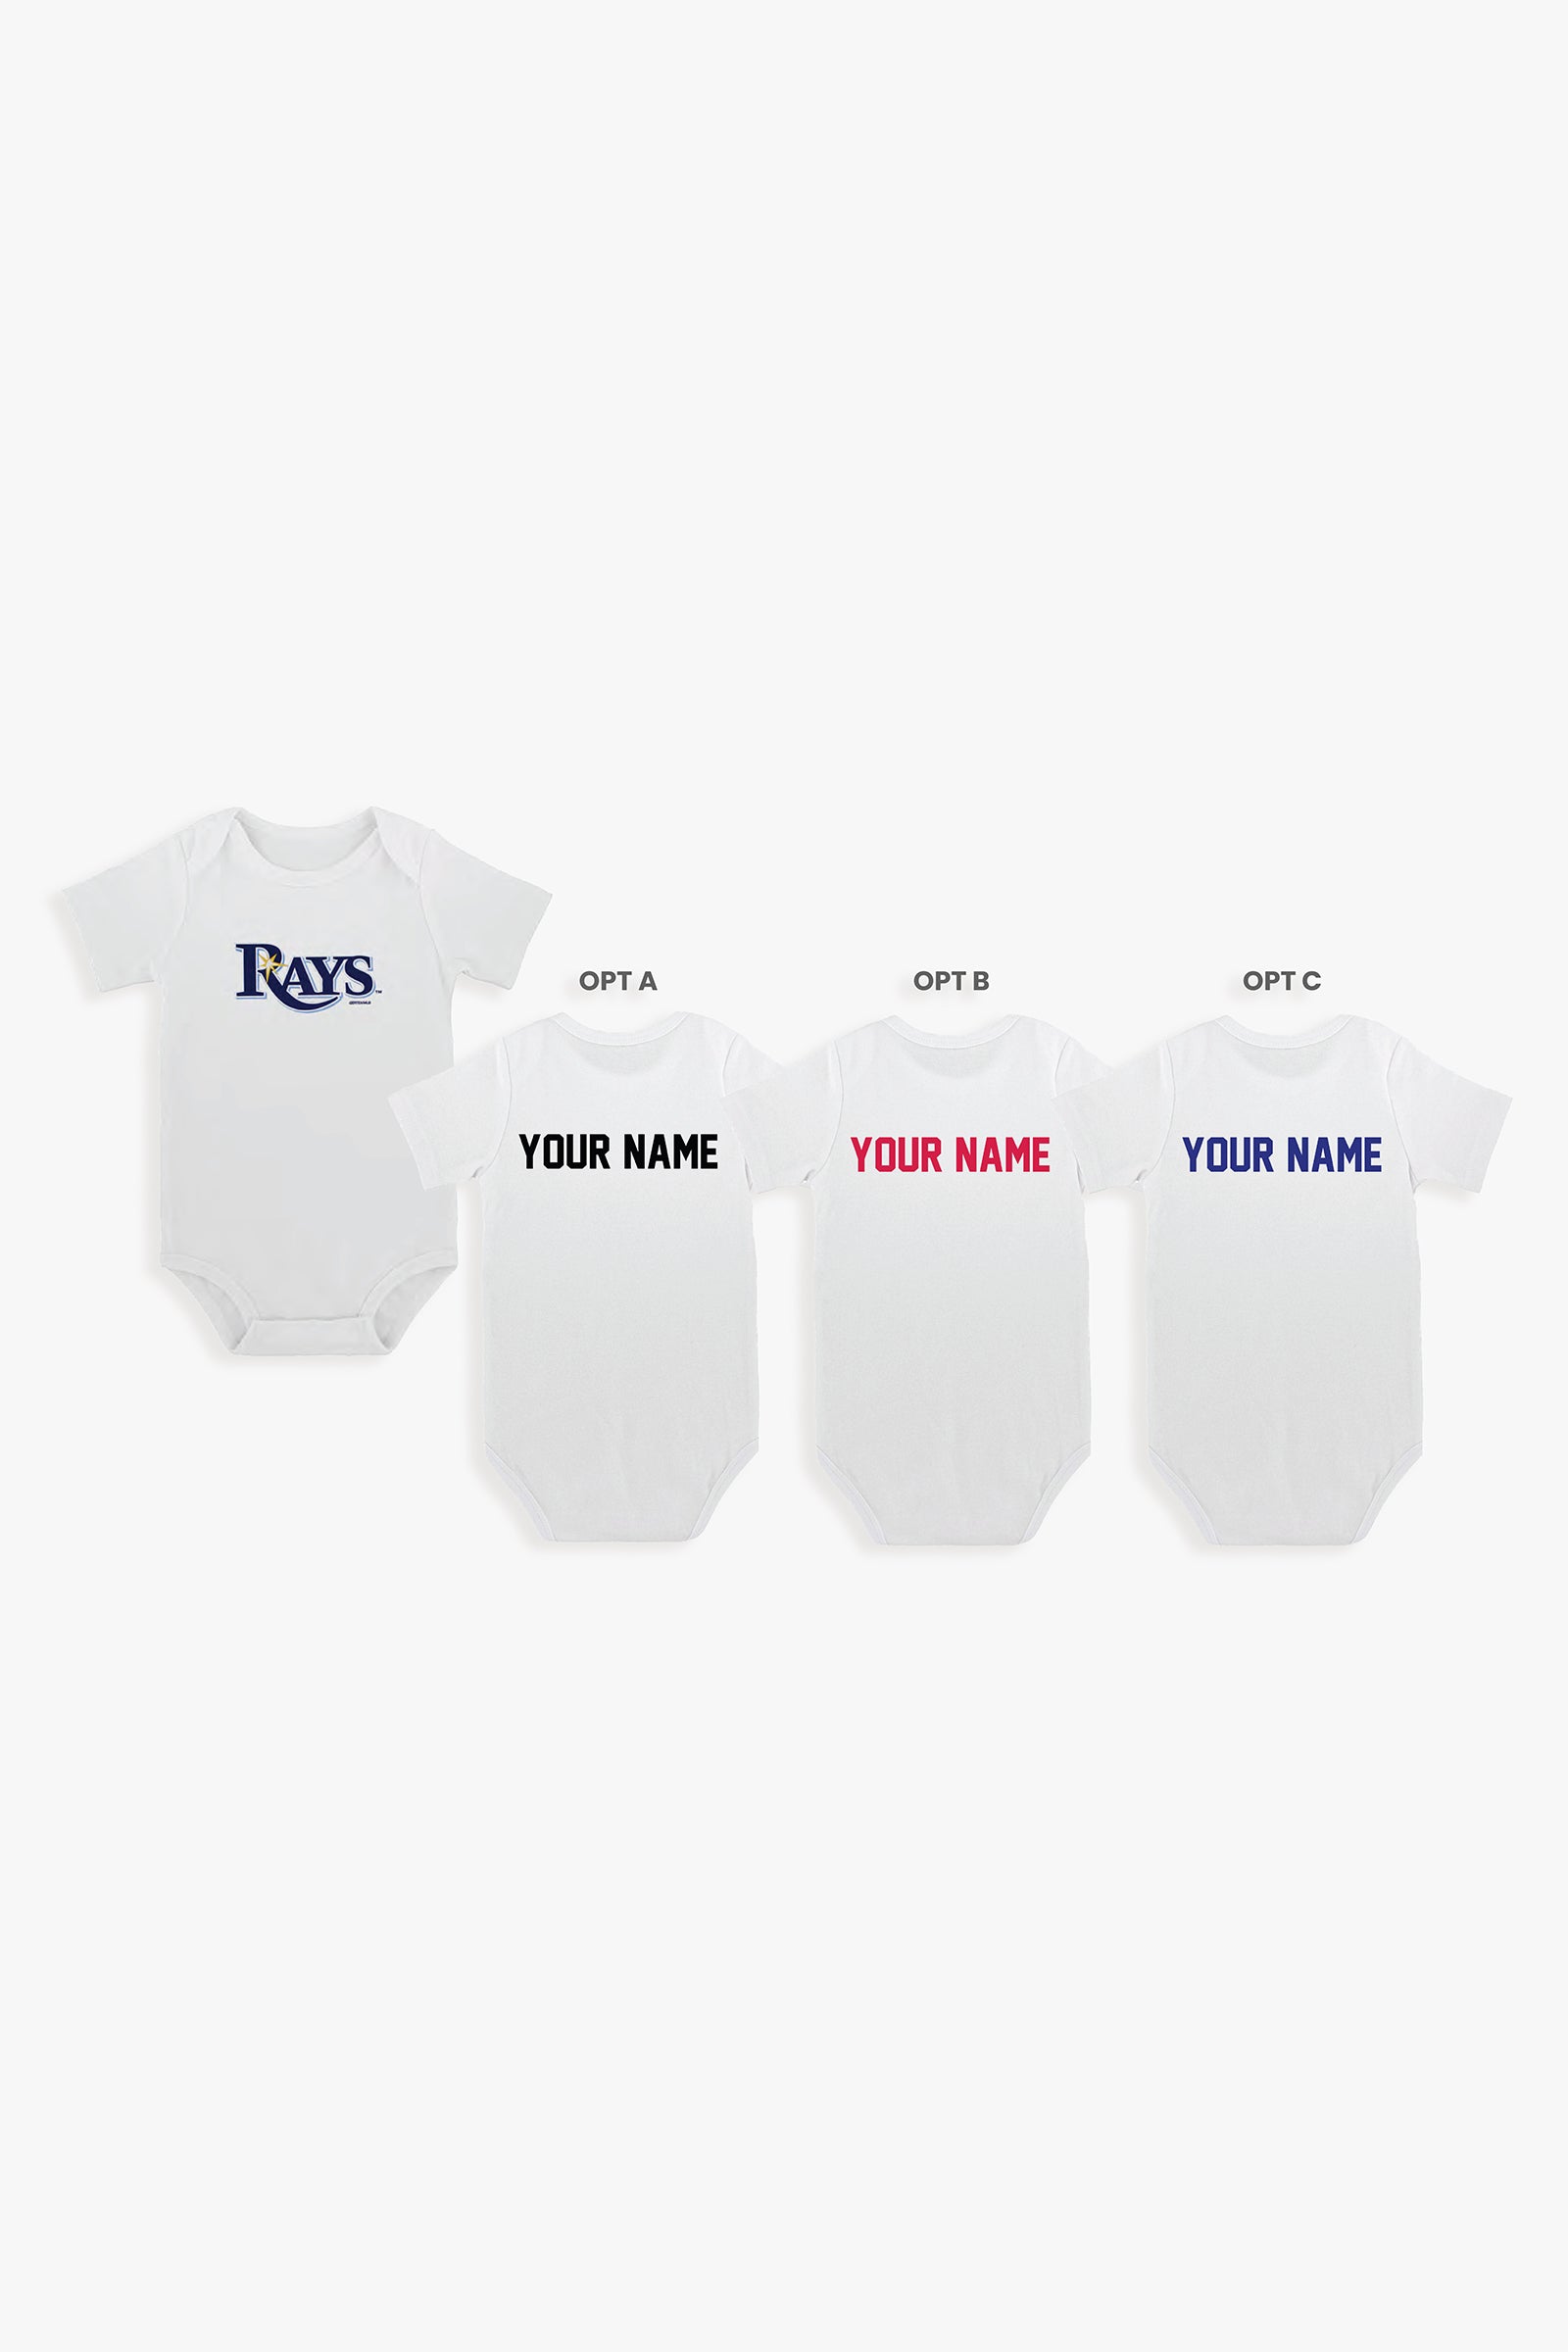 Gertex Customizable MLB Baby Bodysuit in White (0-3 Months)